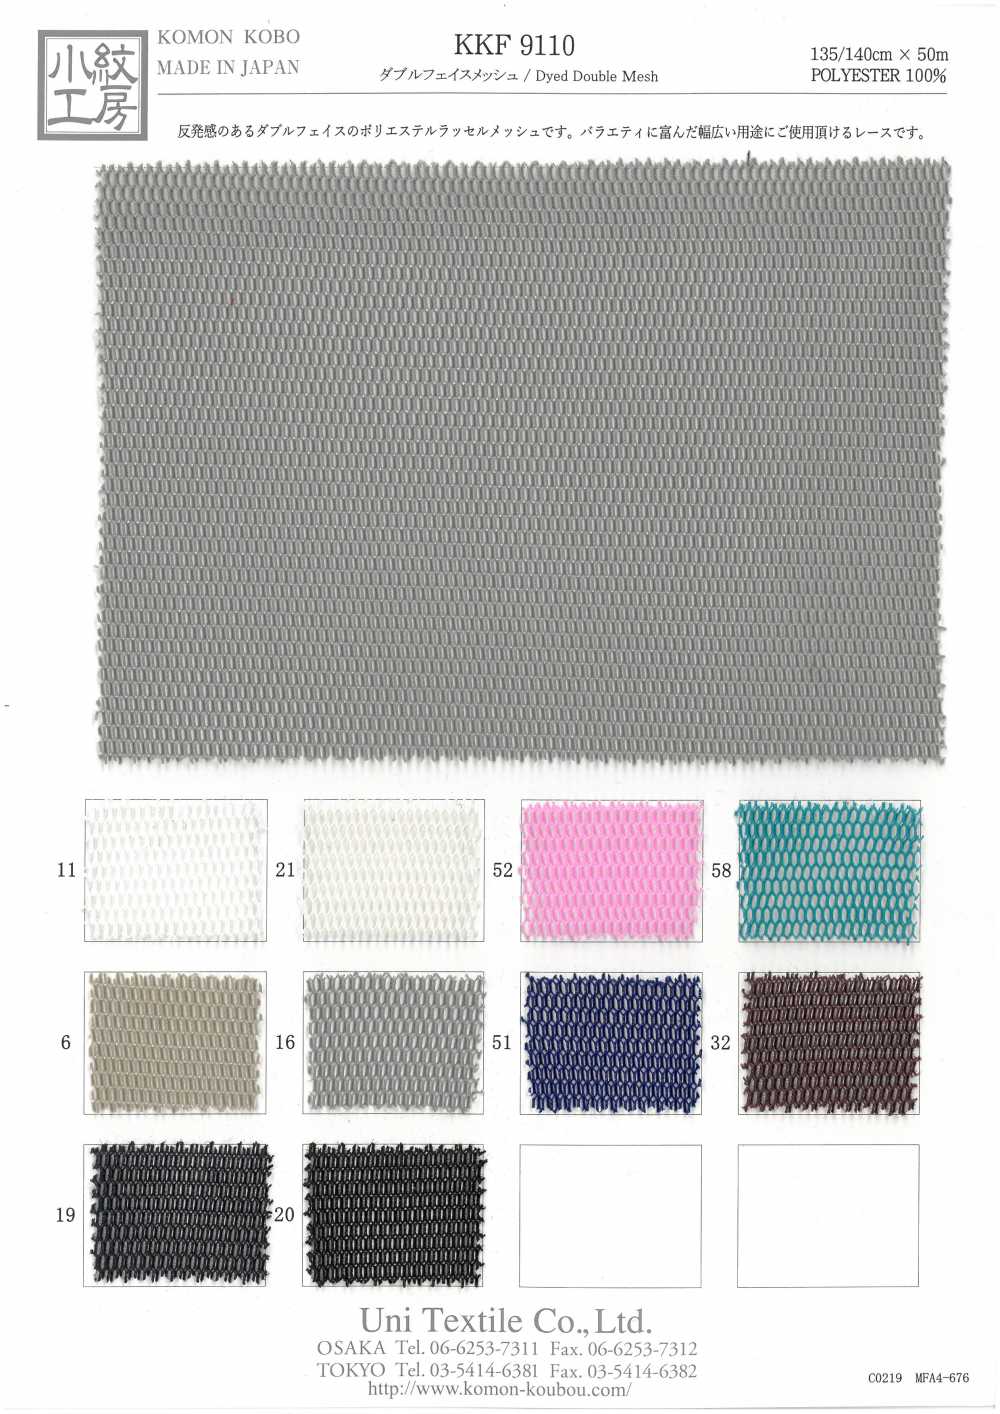 KKF9110 Malla De Doble Cara[Fabrica Textil] Uni Textile